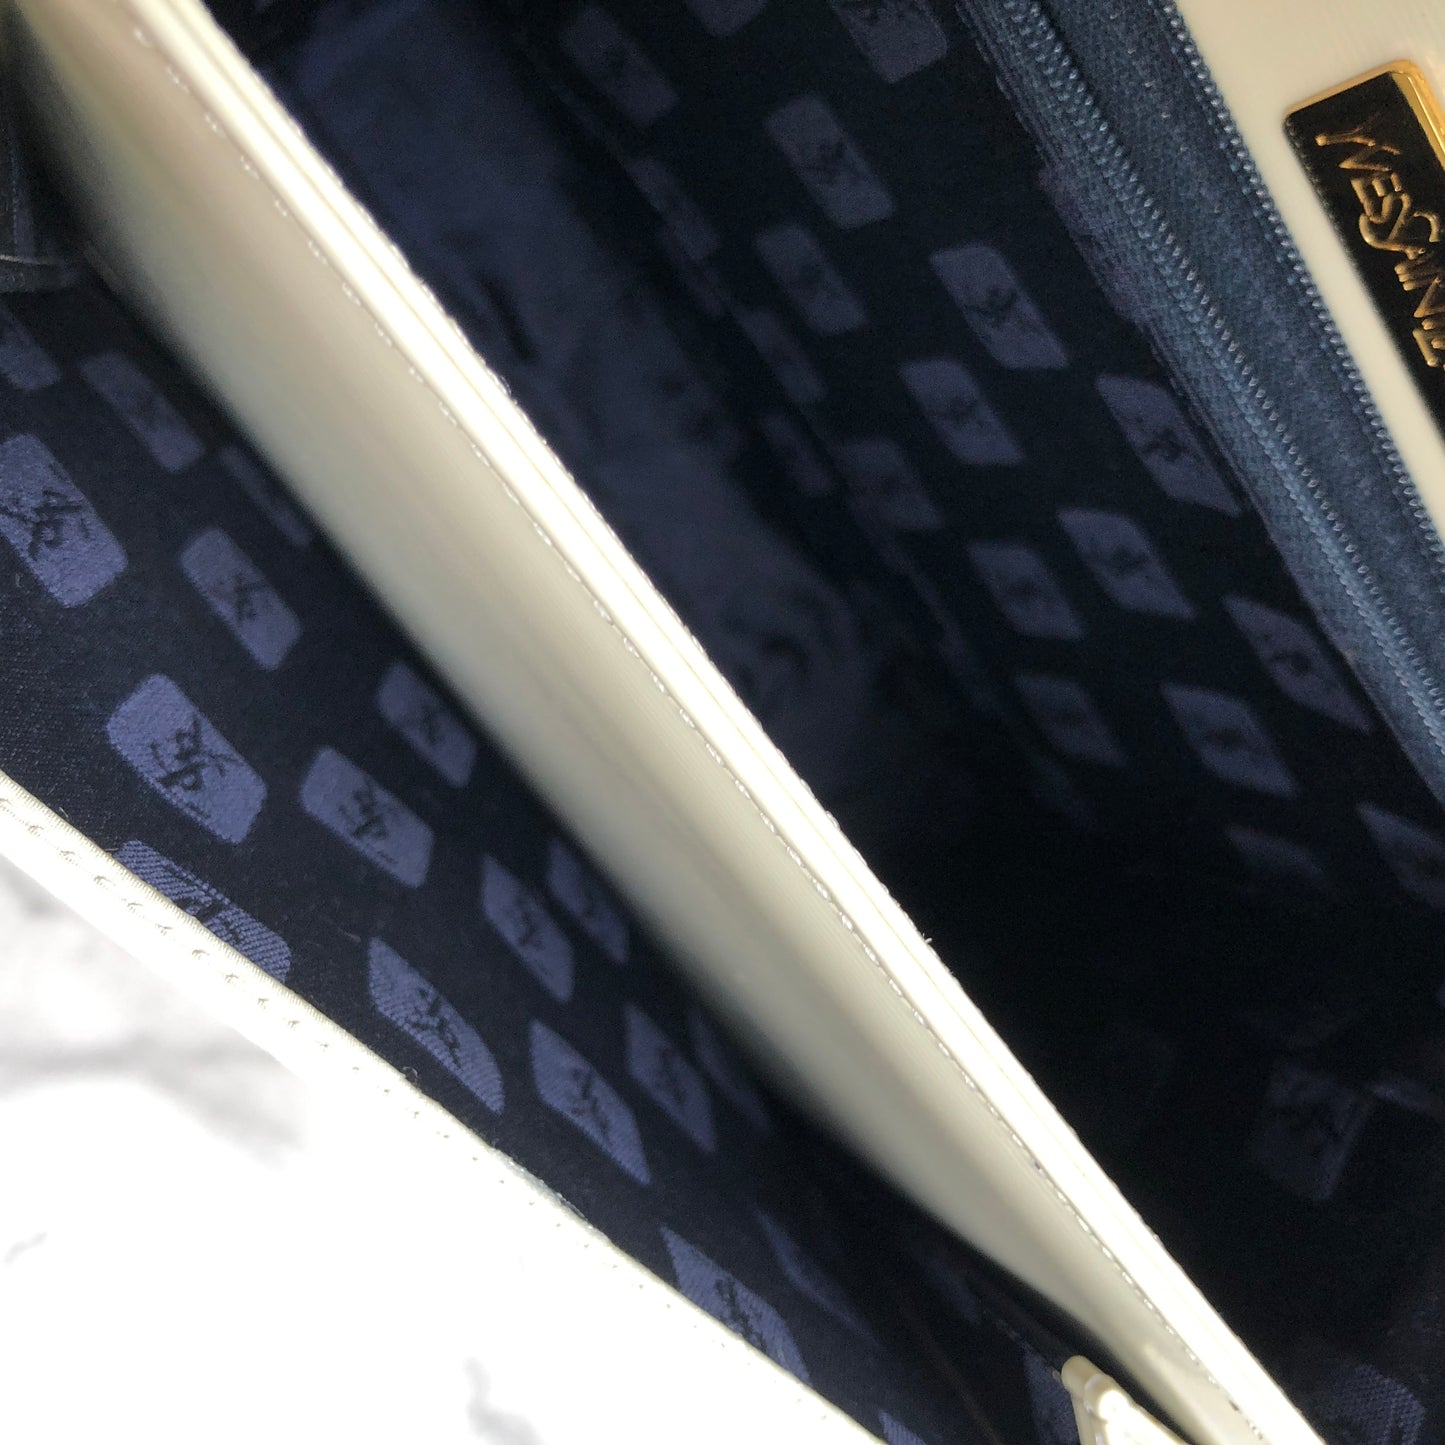 Yves Saint Laurent Logo Embossed Fabric Leather Handbag White Off-White Vintage Old d226gd